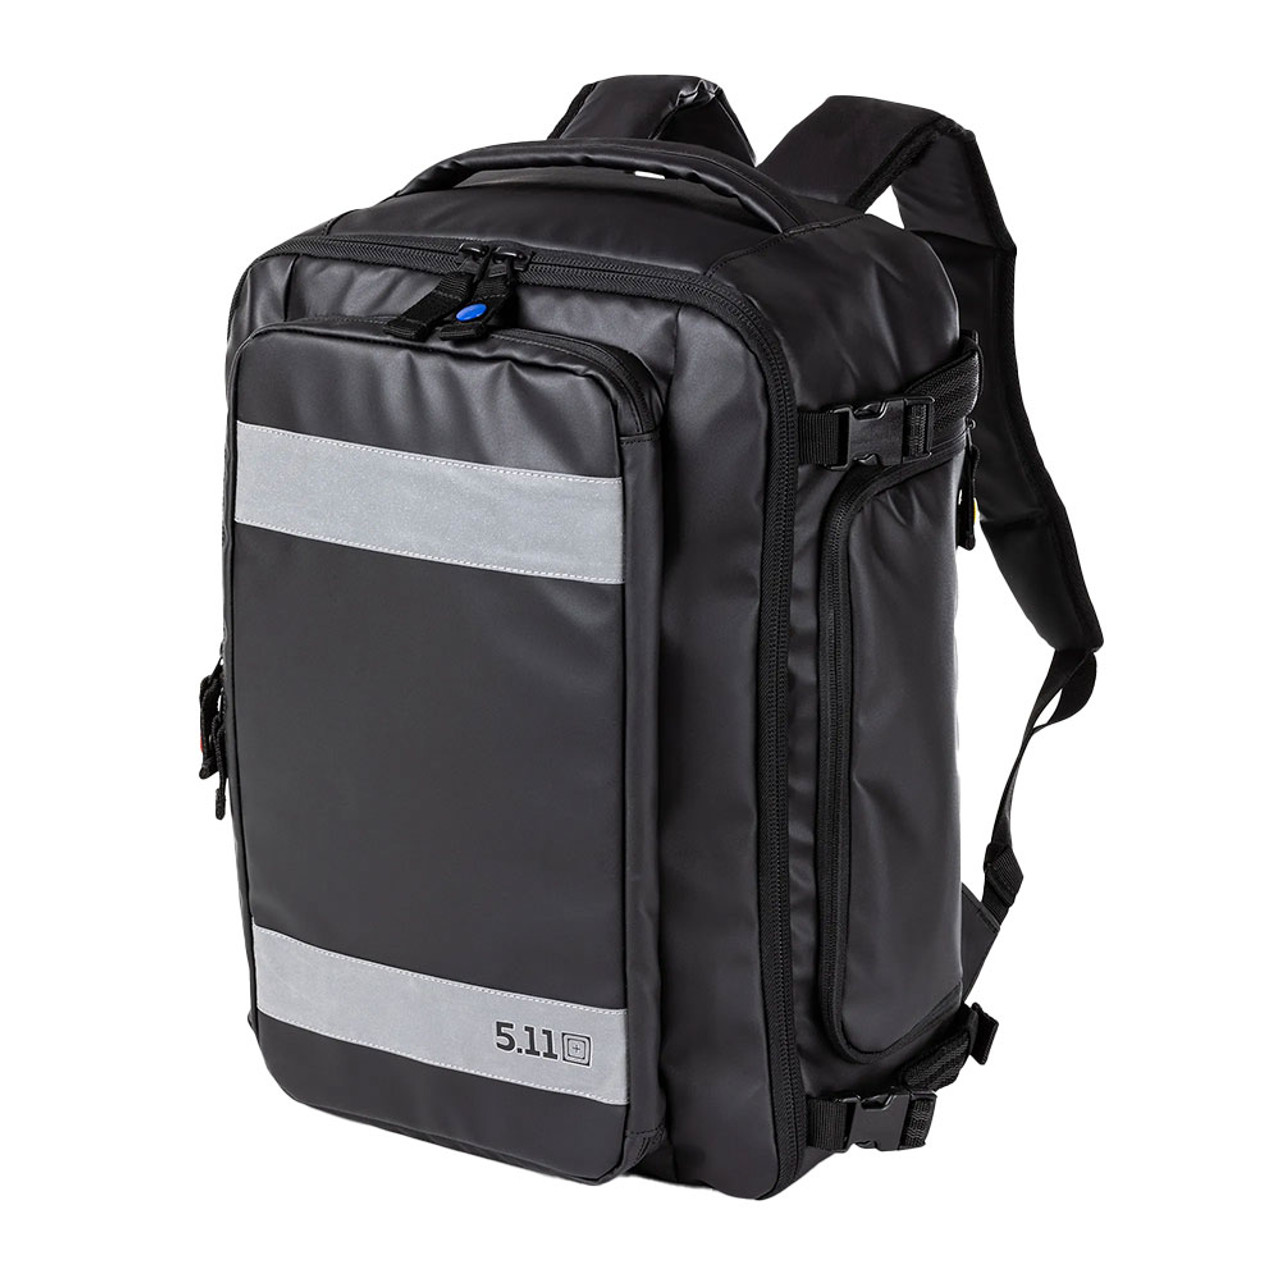 5.11 Tactical Responder 48 Backpack